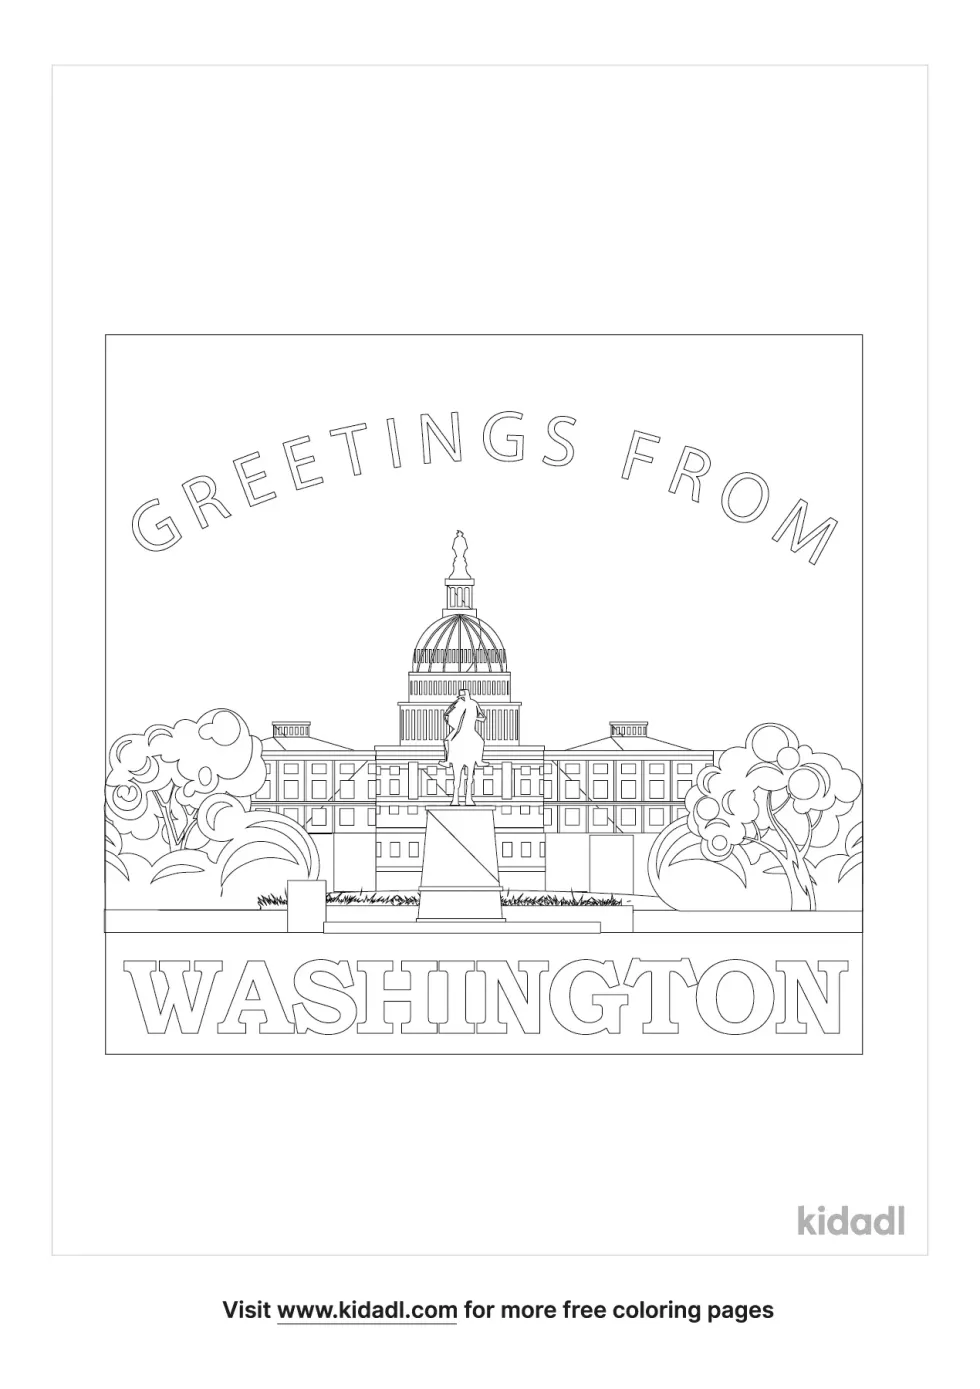 Greetings From Washington | Kidadl